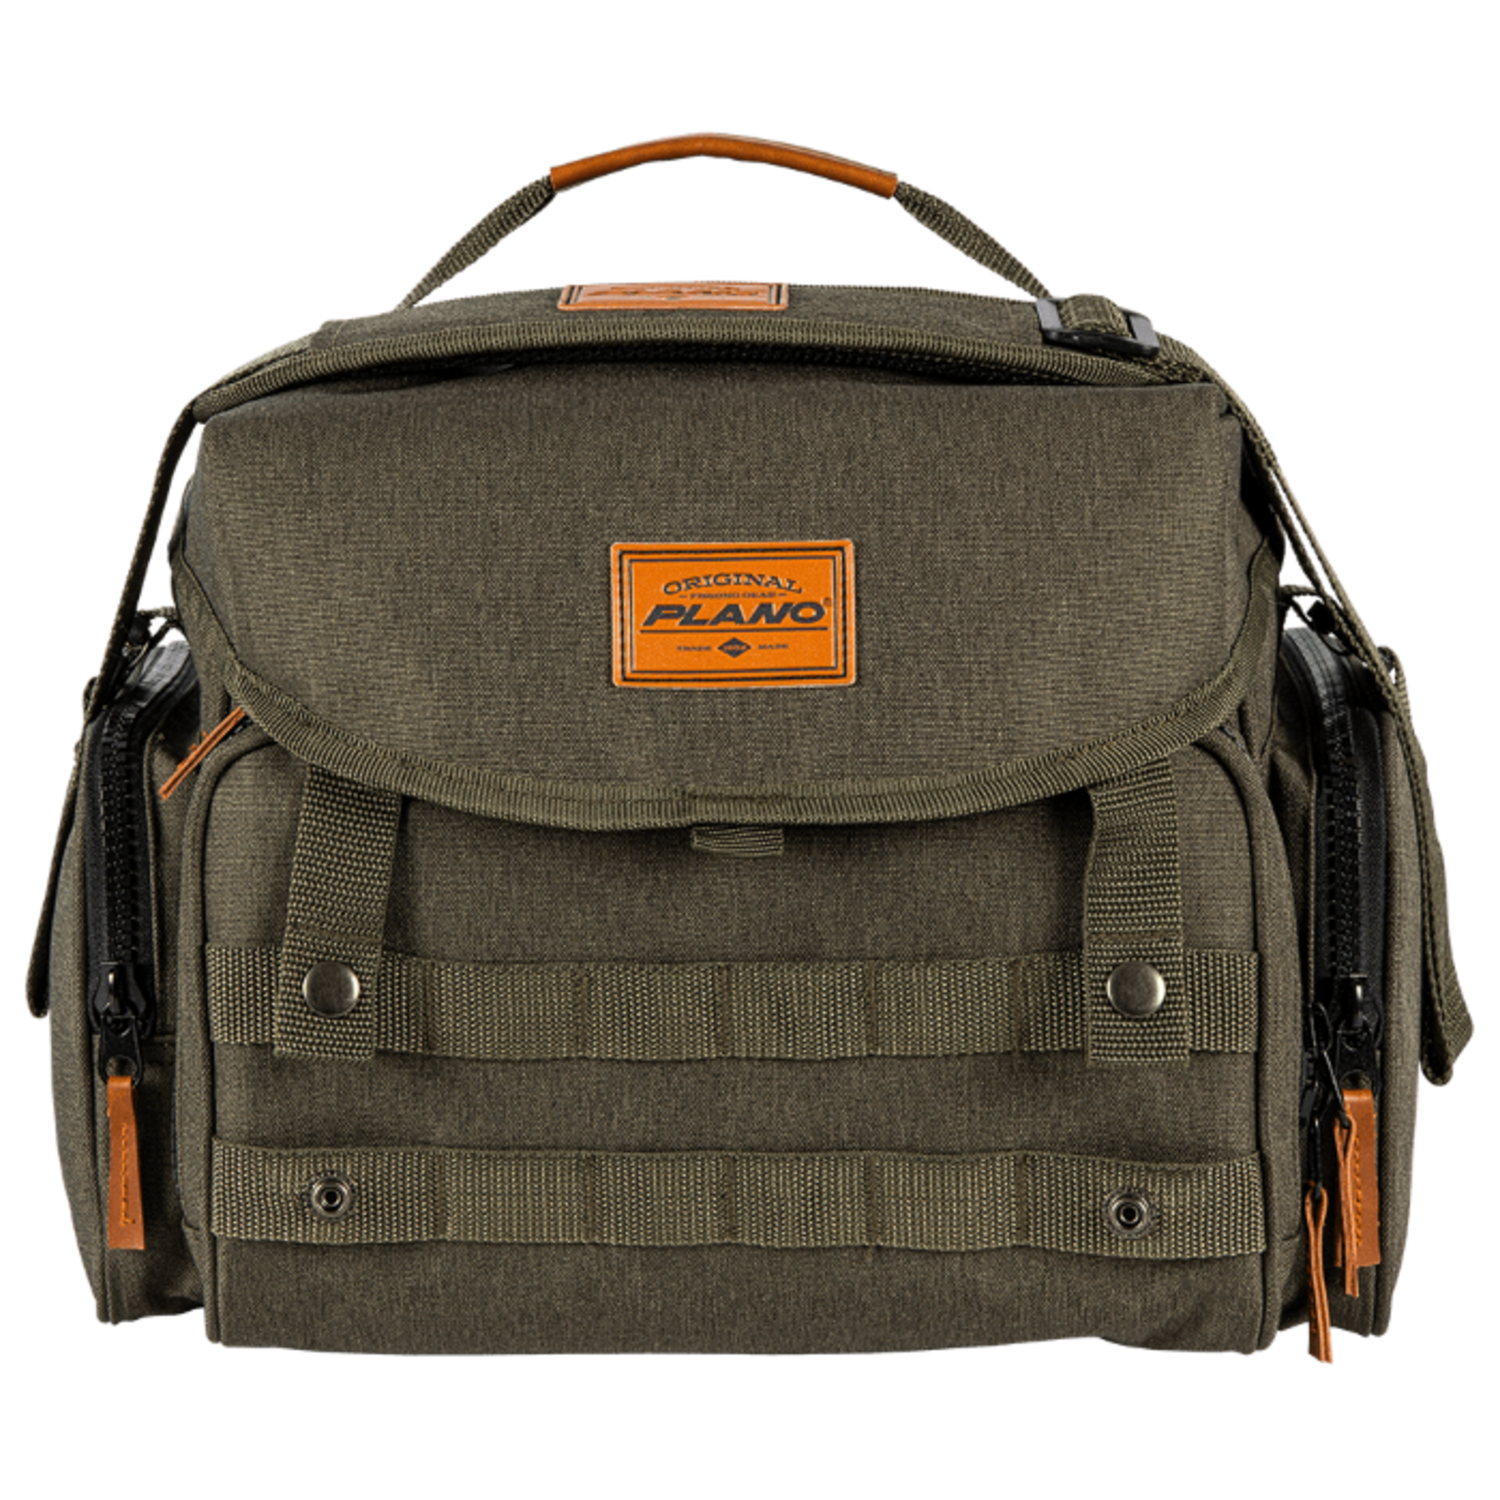 Plano A Series 2.0 Tackle Bag 3600 Size - Fin-atics Marine Supply Ltd. Inc.